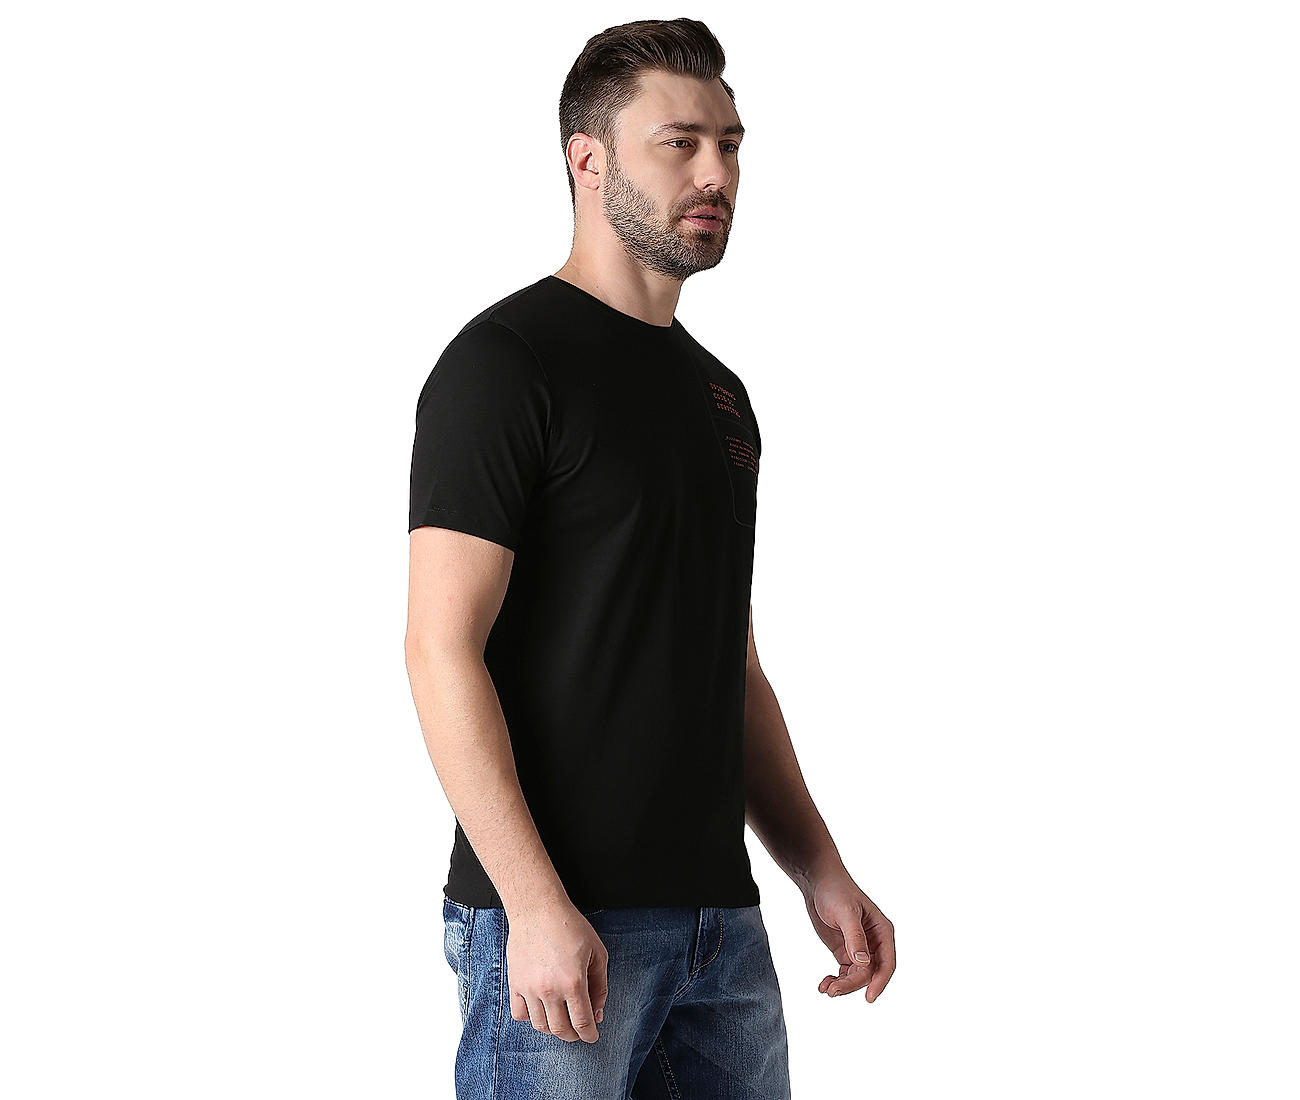 Buy Black Slim Fit Round Neck Printed T-Shirts for Men Online at Killer ...